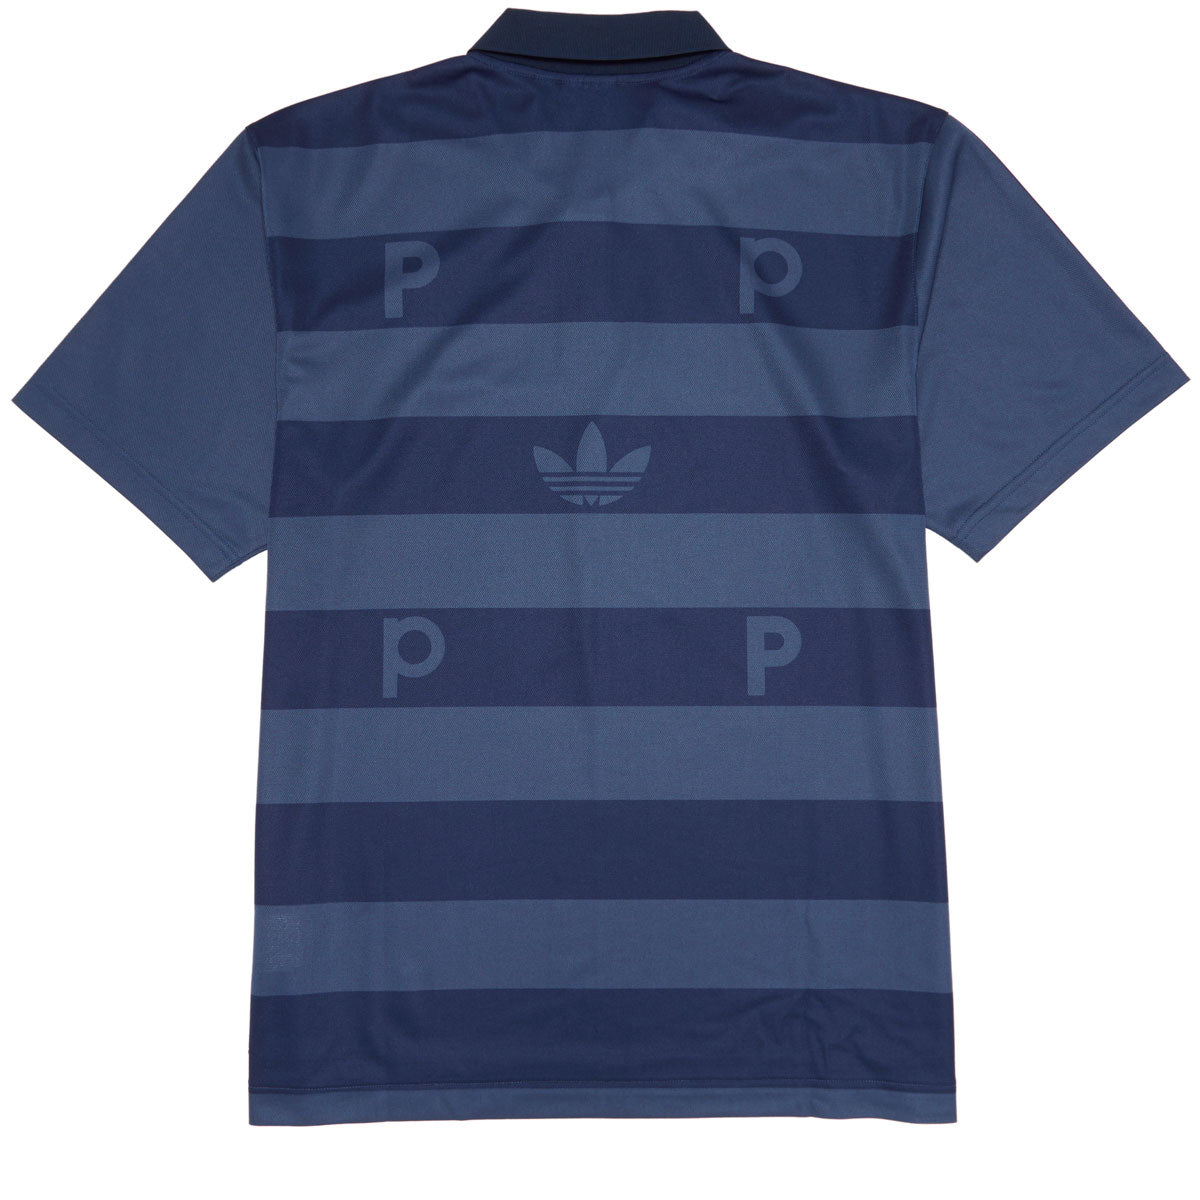 Adidas x Pop Trading Co Polo Shirt - Crew Navy/Collegiate Navy image 2